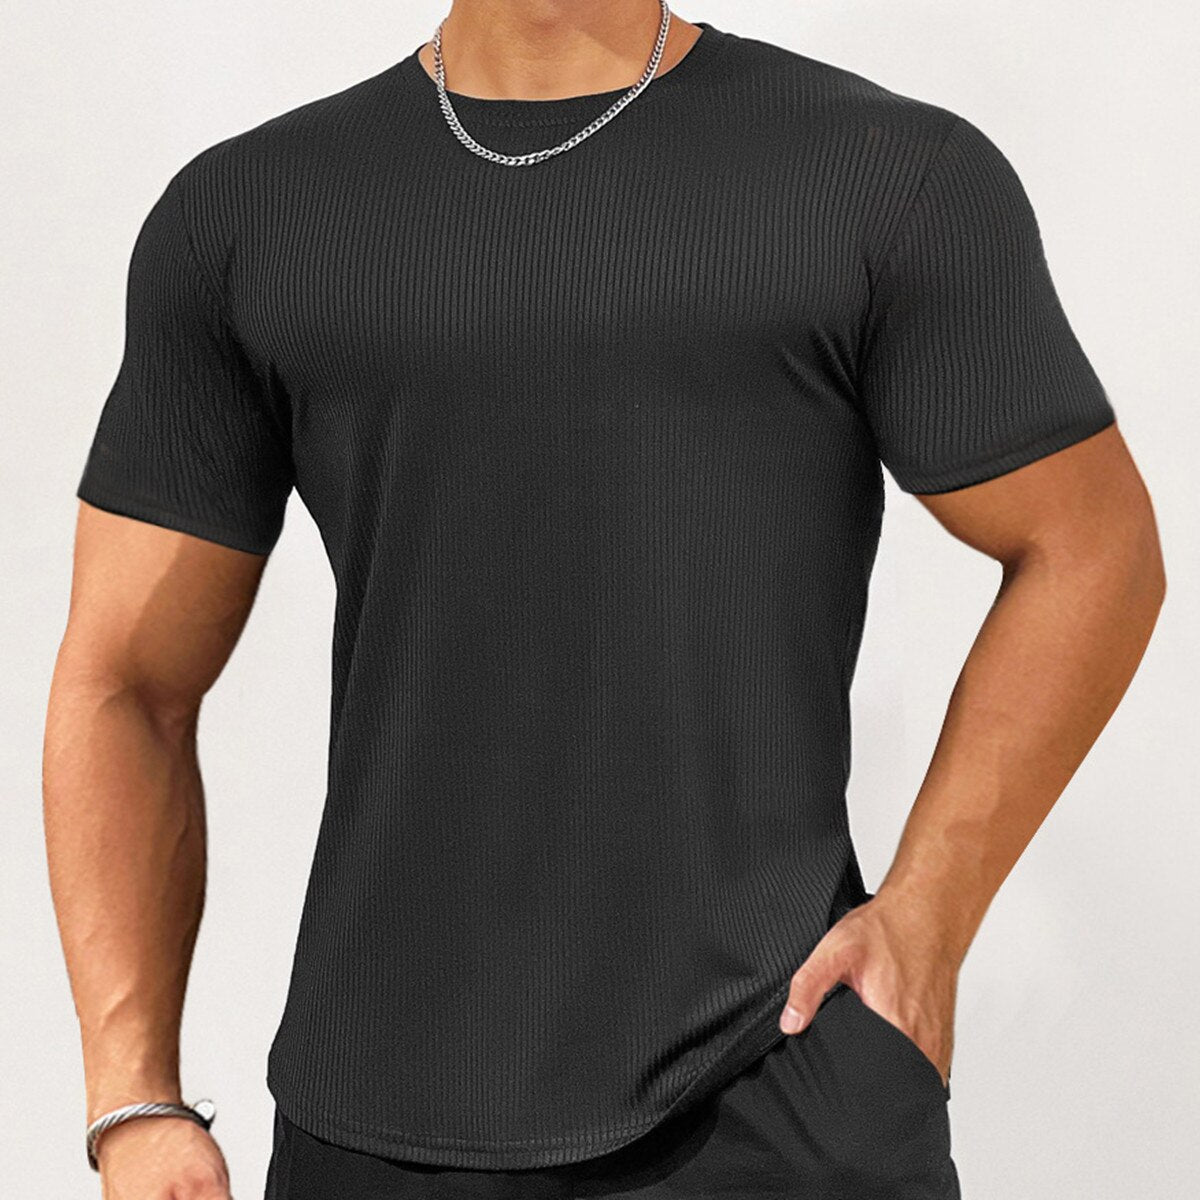 Summer Fitness T-shirt Men Casual Short Sleeve Shirt Male Gym Bodybuilding Skinny Tees Tops Running Sport Black Stripes Clothing